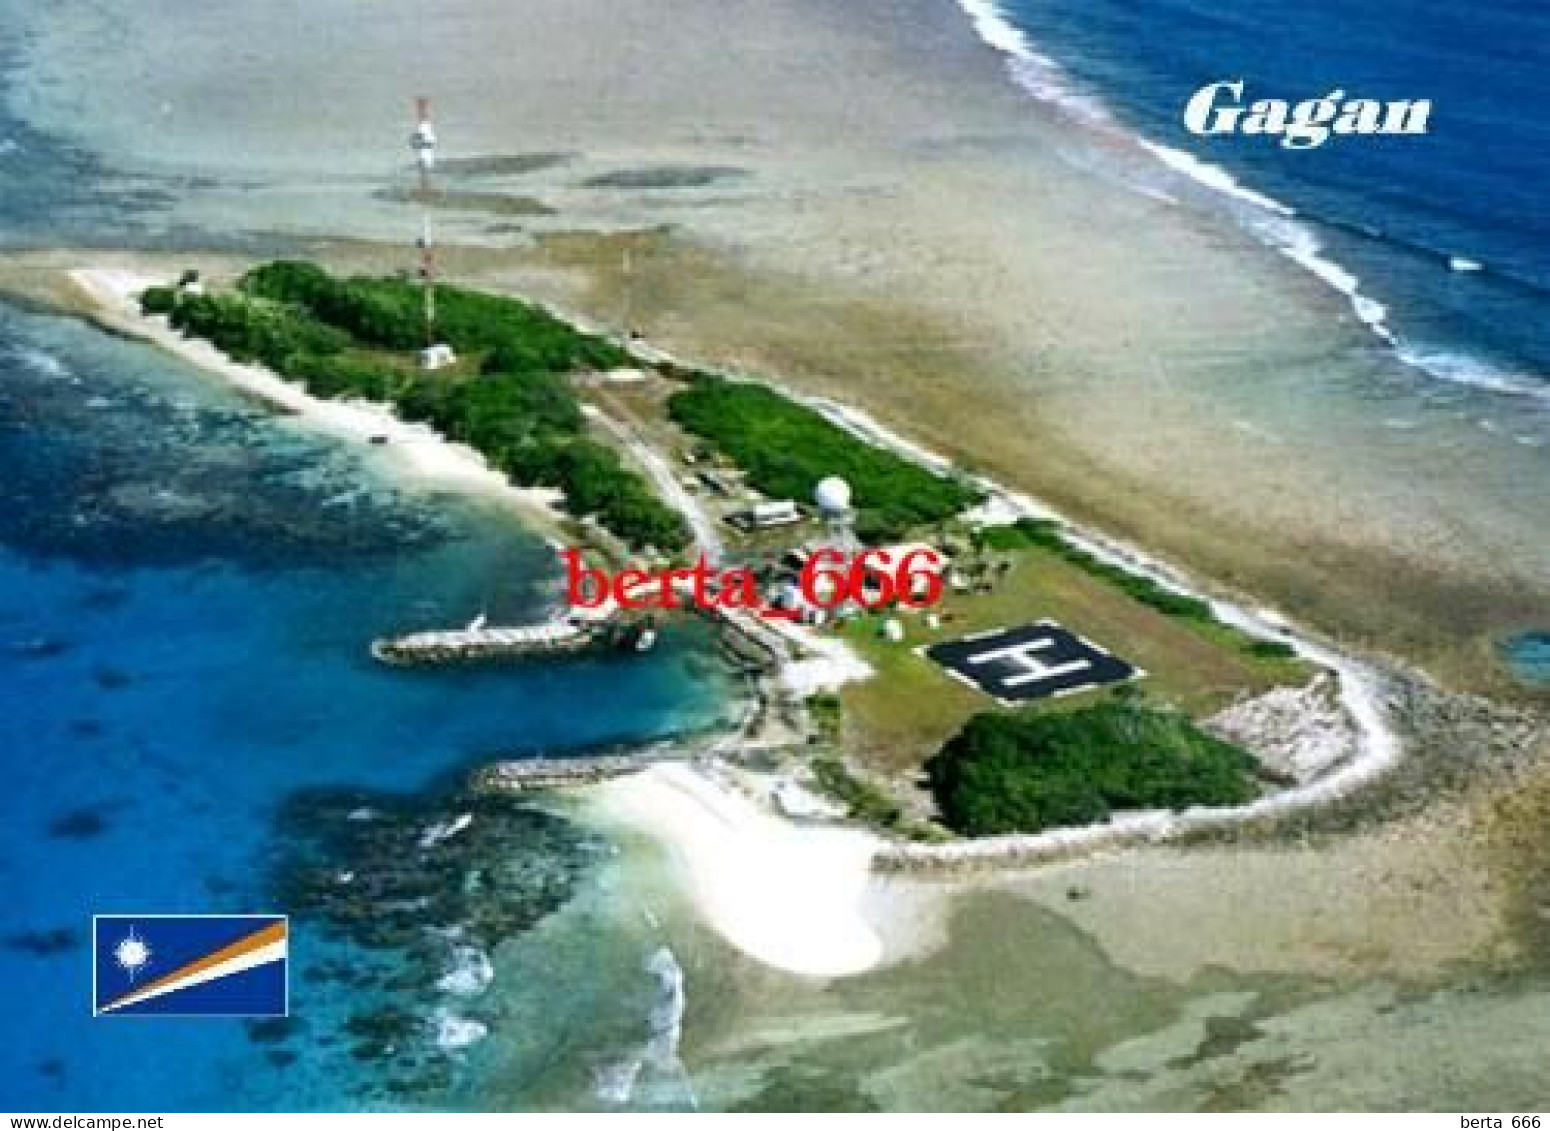 Marshall Islands Gagan Aerial View New Postcard - Marshall